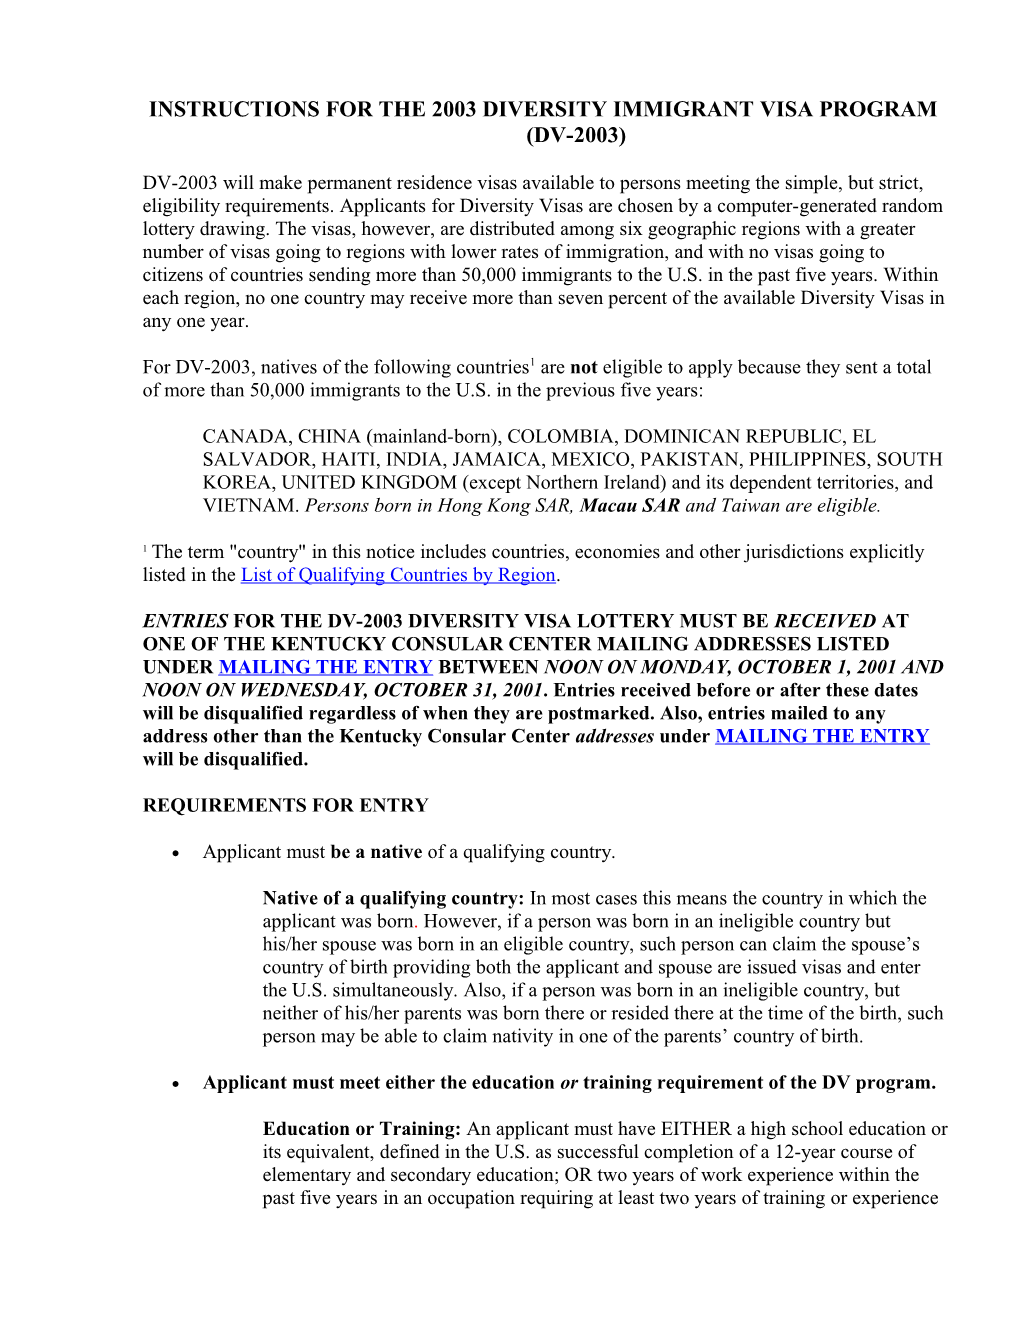 Instructions for the 2003 Diversity Immigrant Visa Program